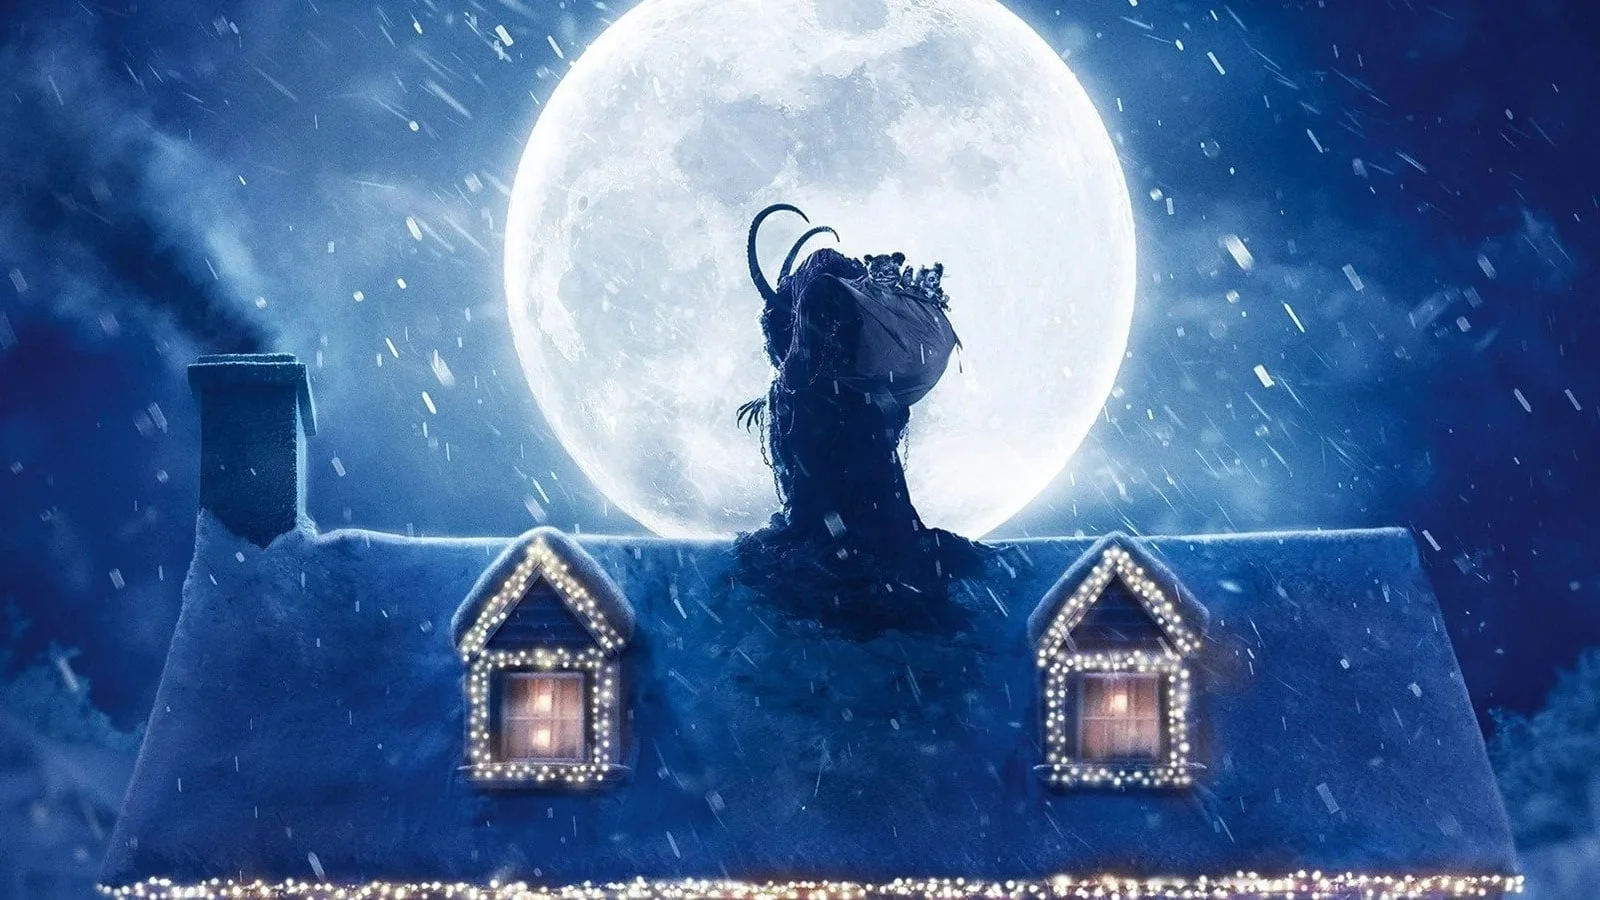 krampus 2015 winter horror movies set in the snow